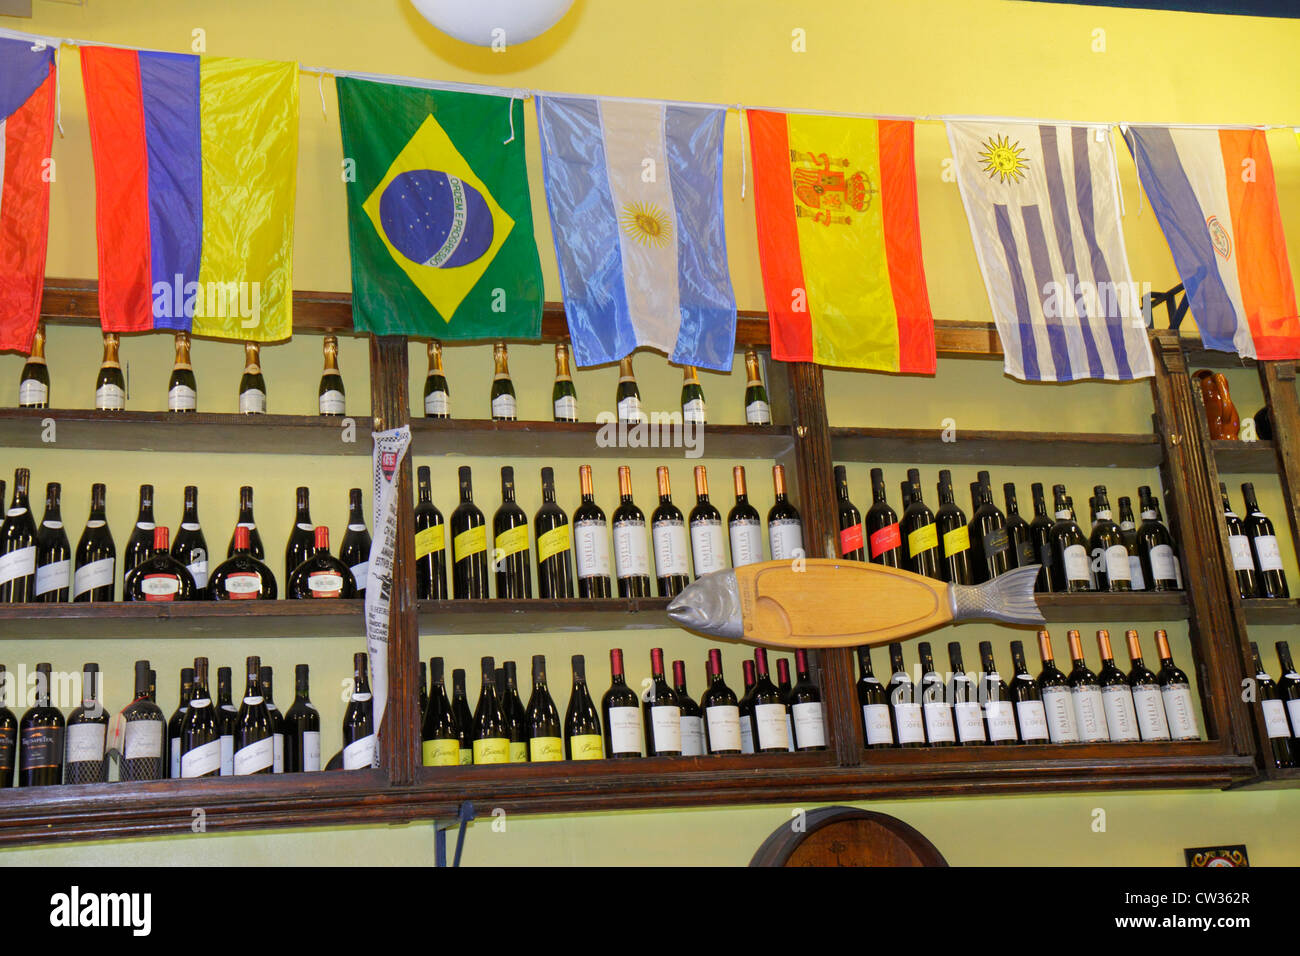 Buenos Aires Argentina,San Telmo,Avenida Defensa,wine shop,bottle,flags,shelf shelves shelving,product products display sale,visitors travel traveling Stock Photo